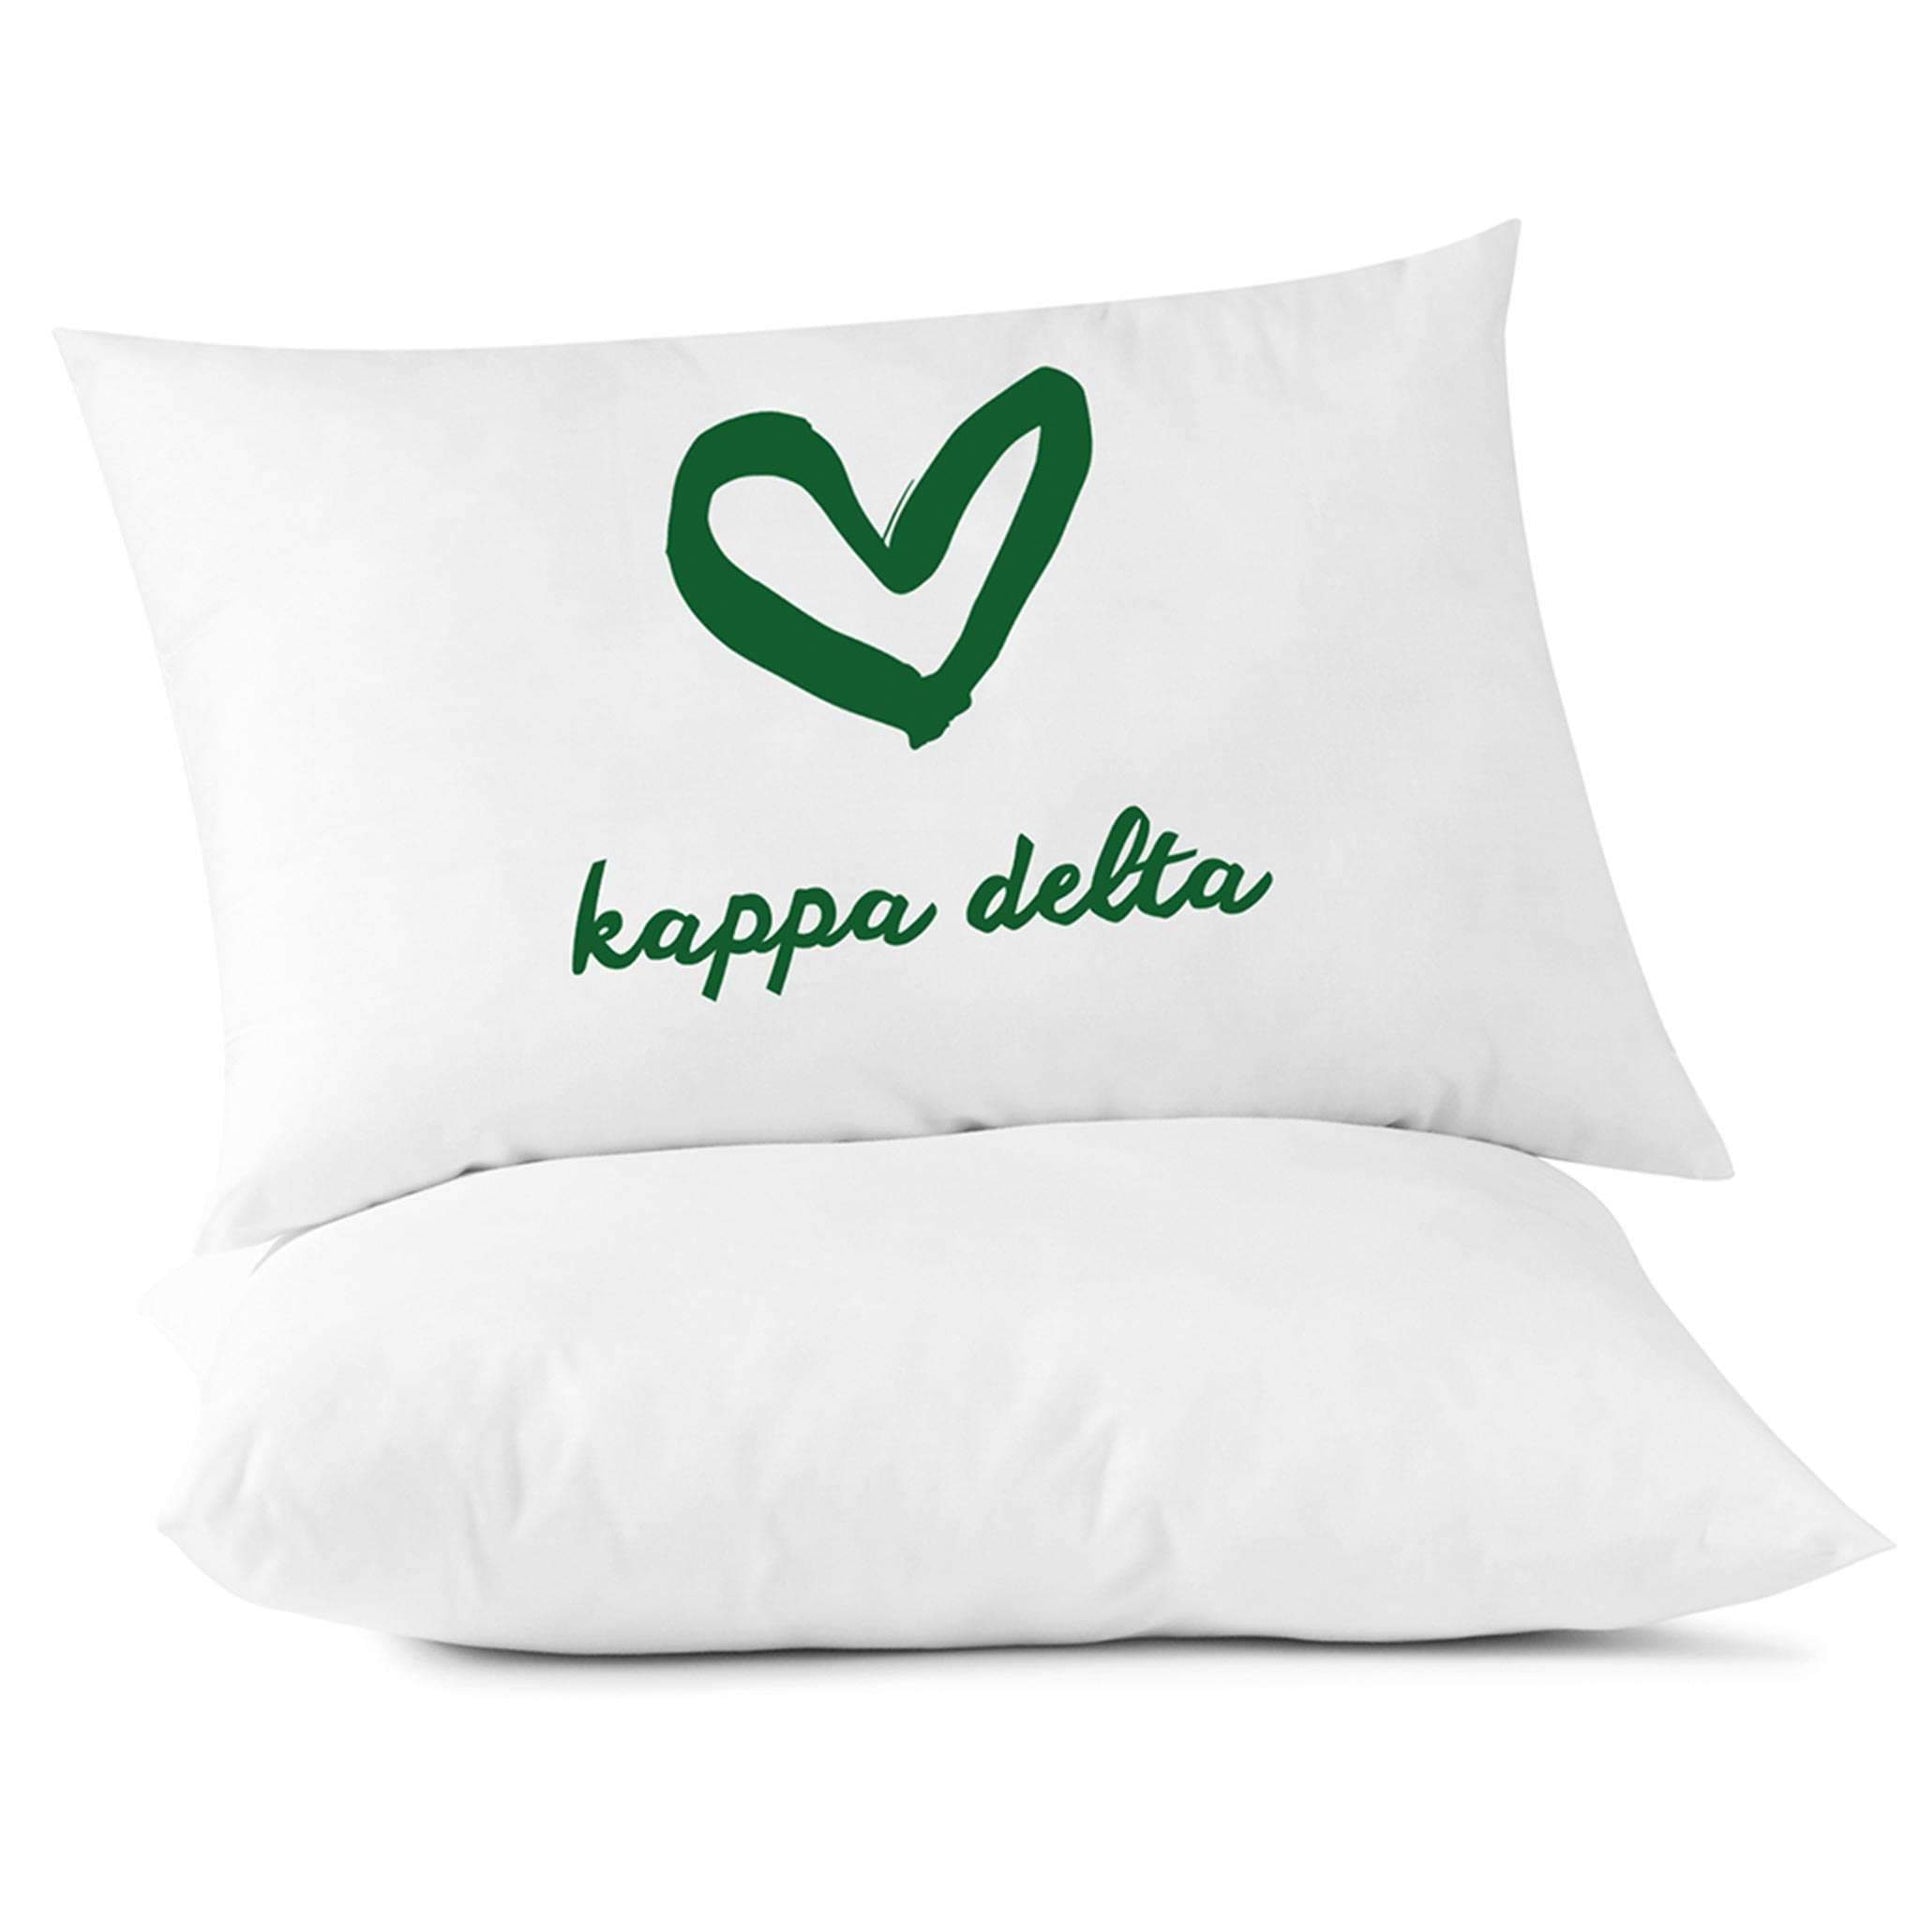 KD sorority name with heart design custom printed on pillowcase.